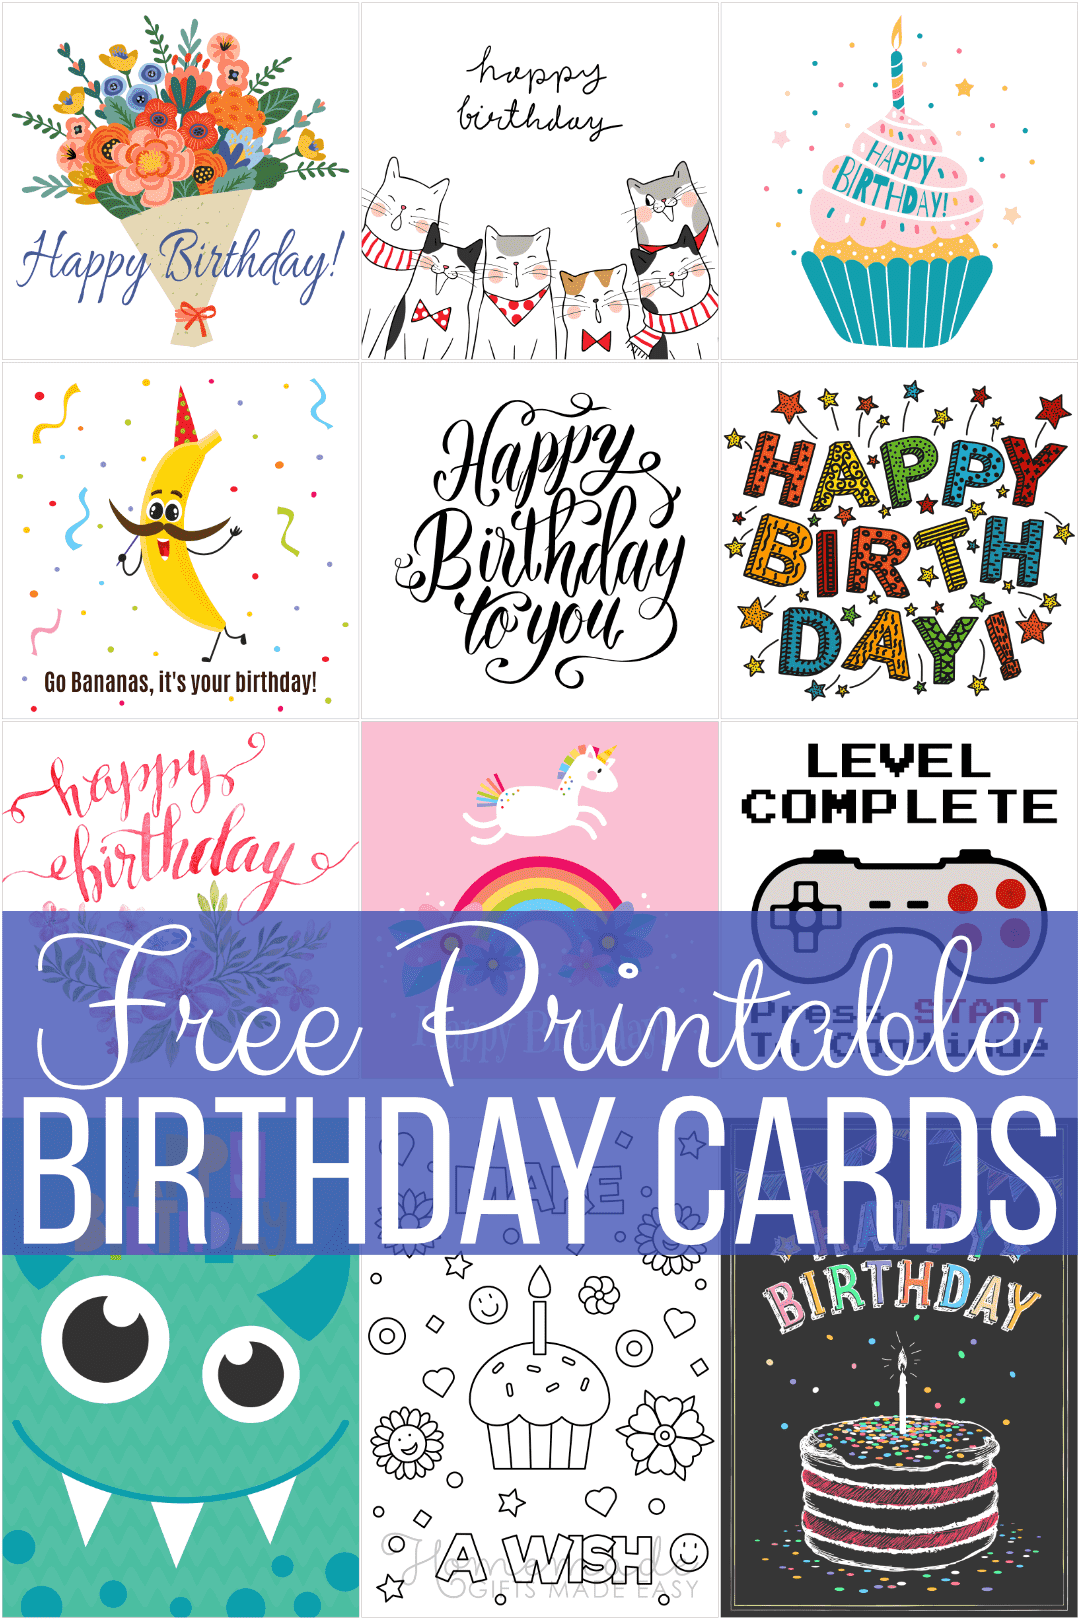 Birthday card template free